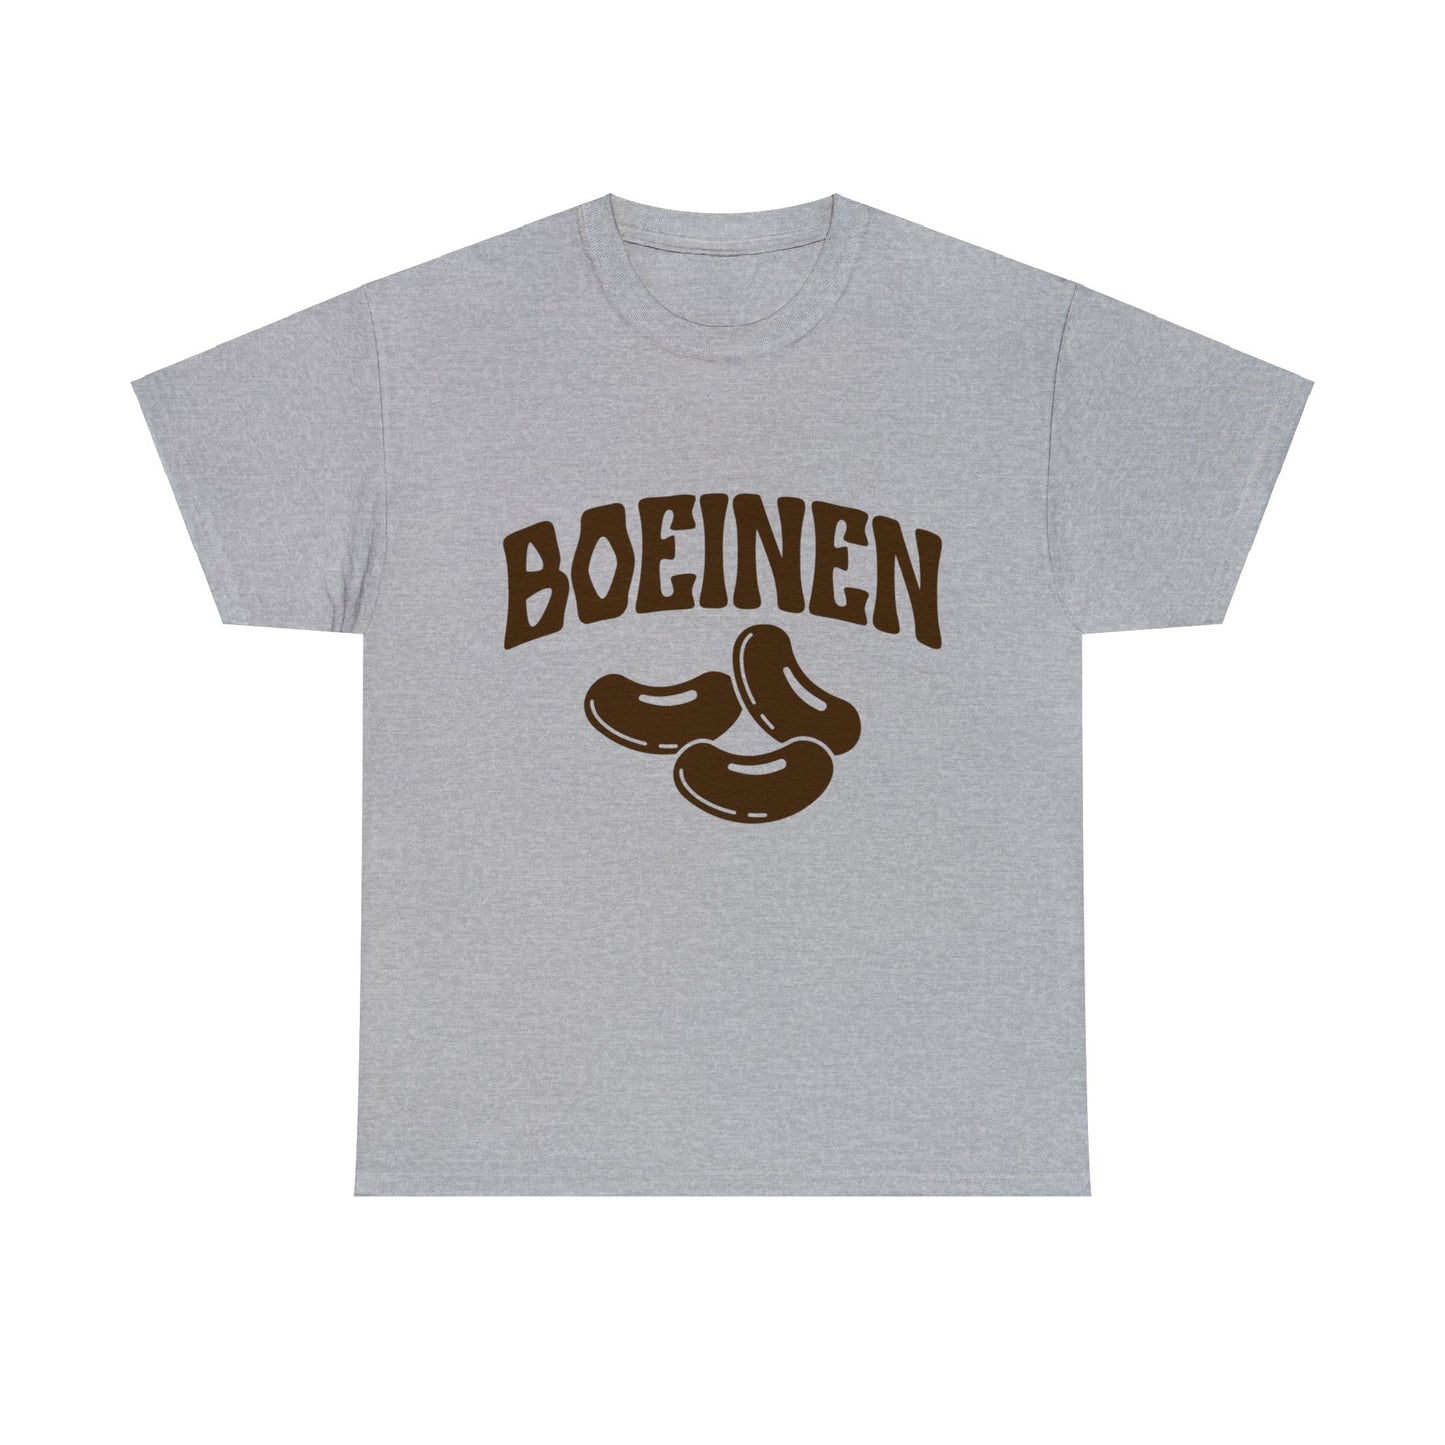 Int Oilsjters - Tshirt - Boeinen